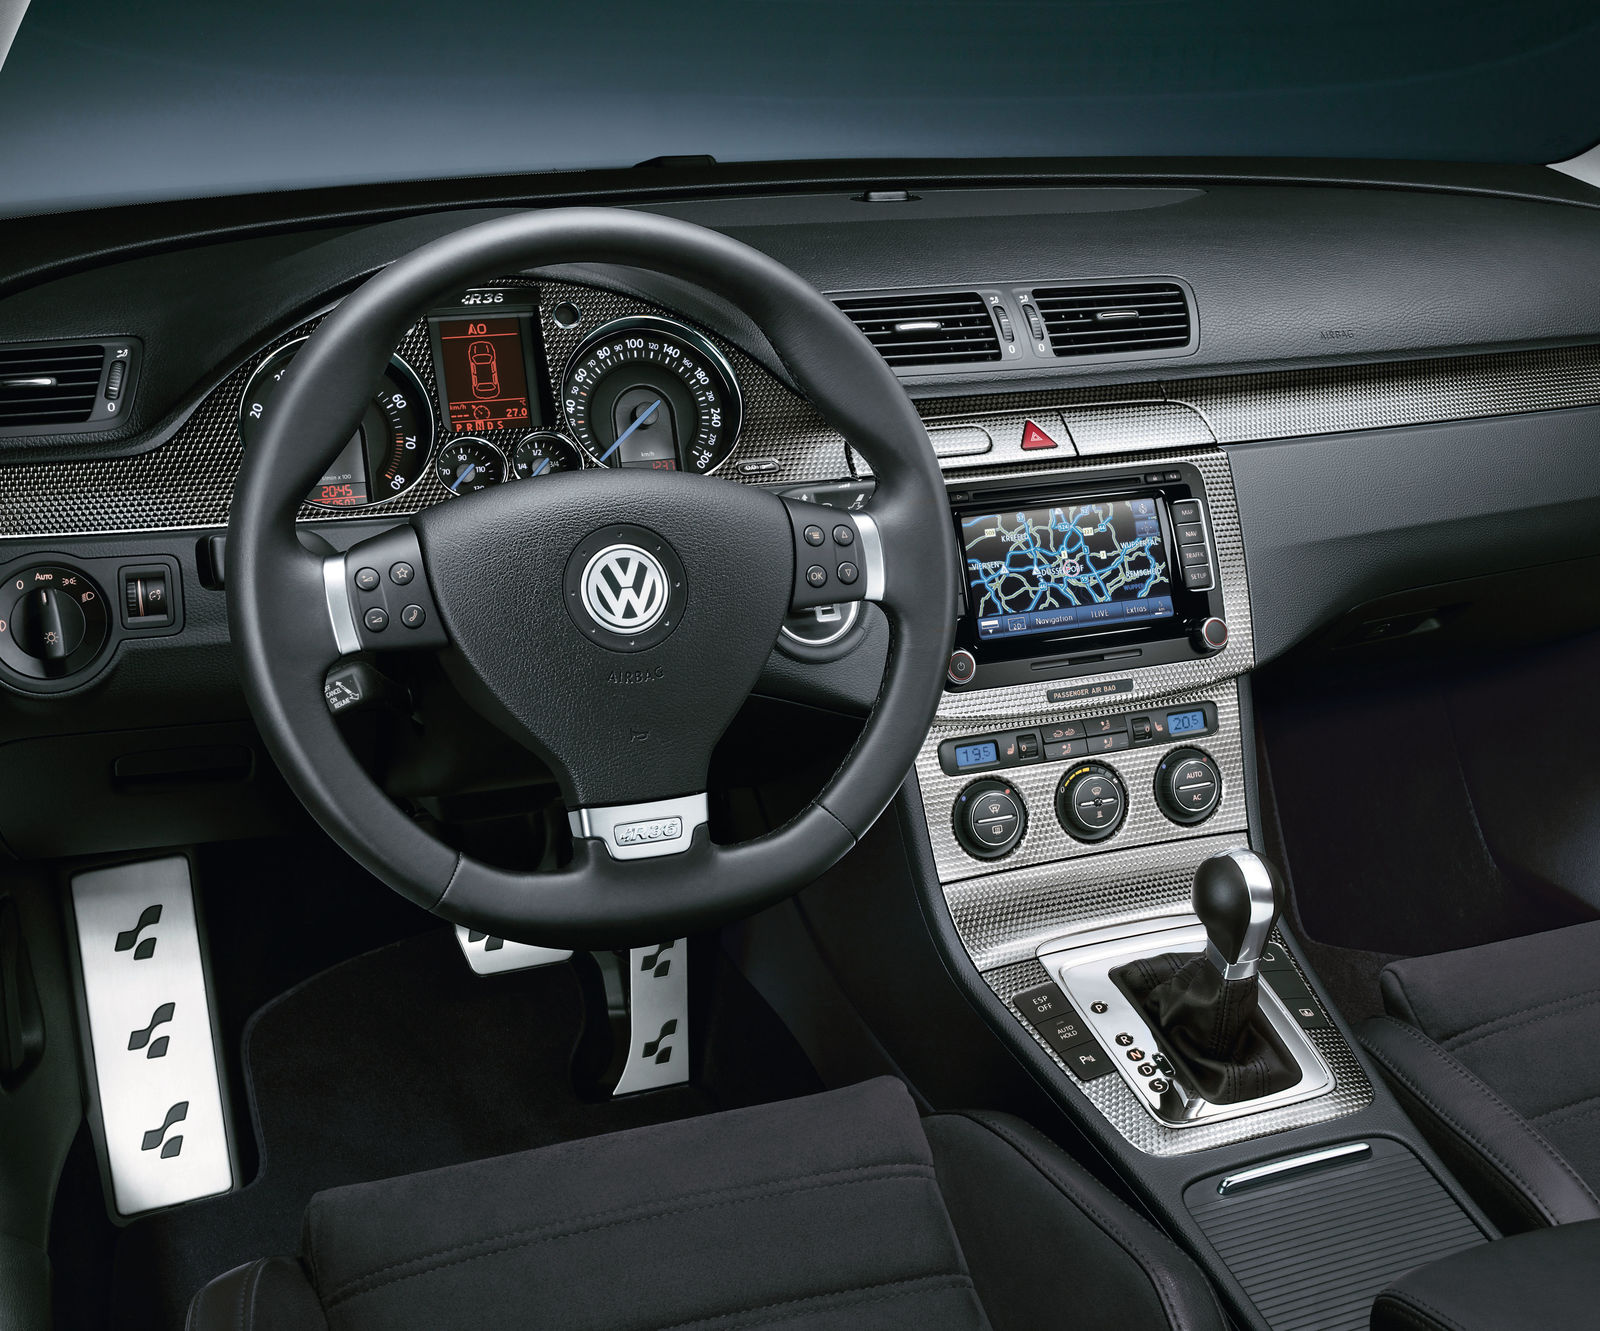 Торпеда фольксваген пассат. Фольксваген Пассат b6 салон. B6 Фольксваген Пассат 2007. VW Passat b6 салон. Volkswagen Passat b6 Interior.